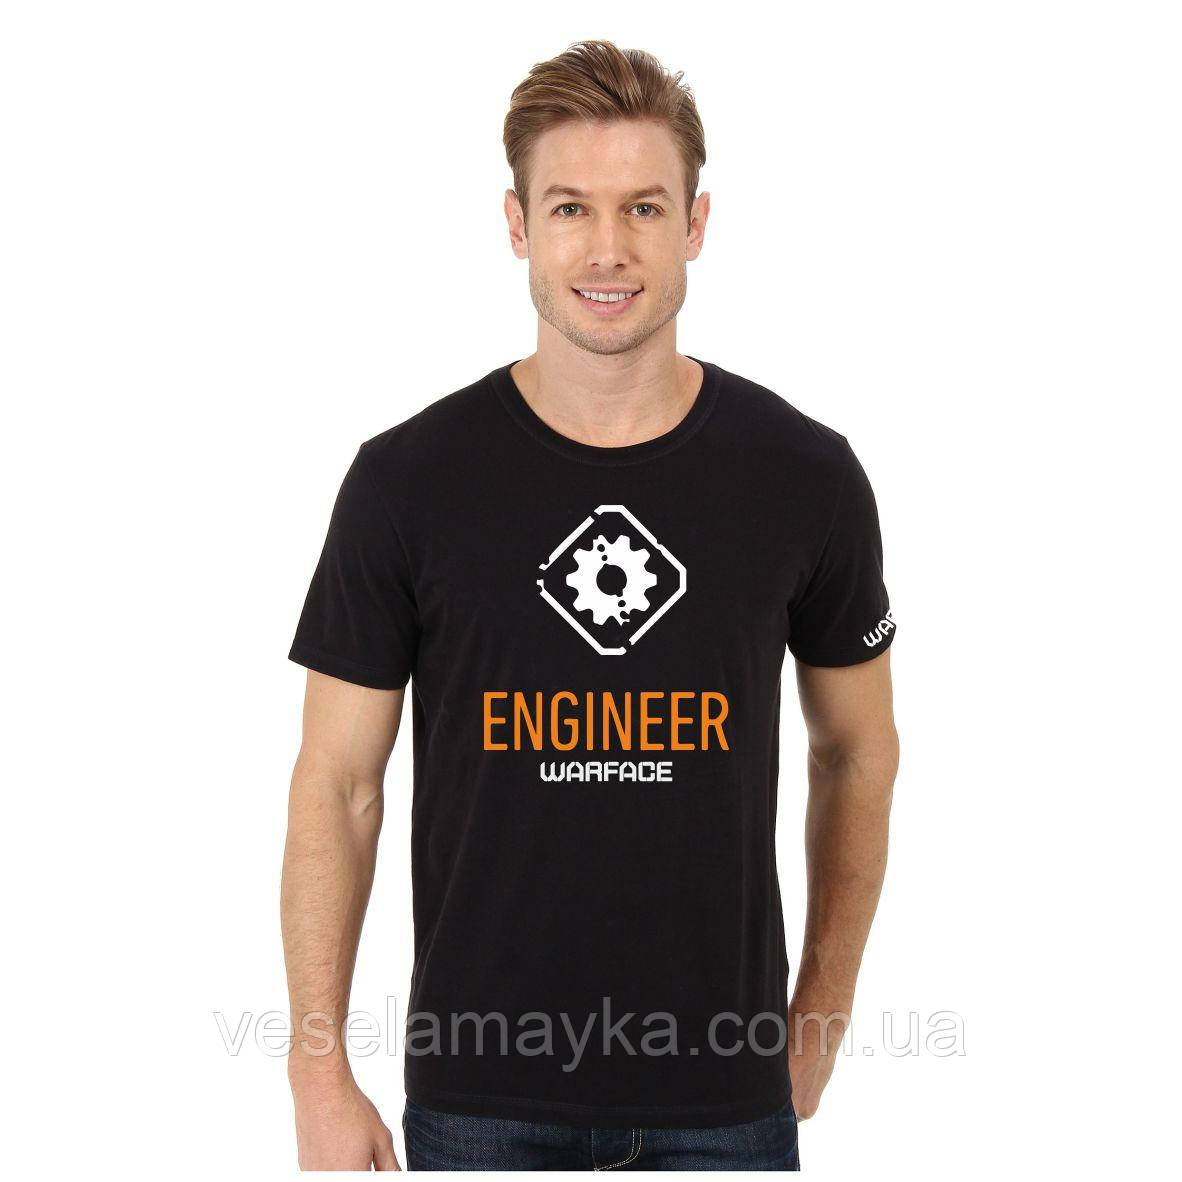 Футболка WarFace Engineer (інженер)